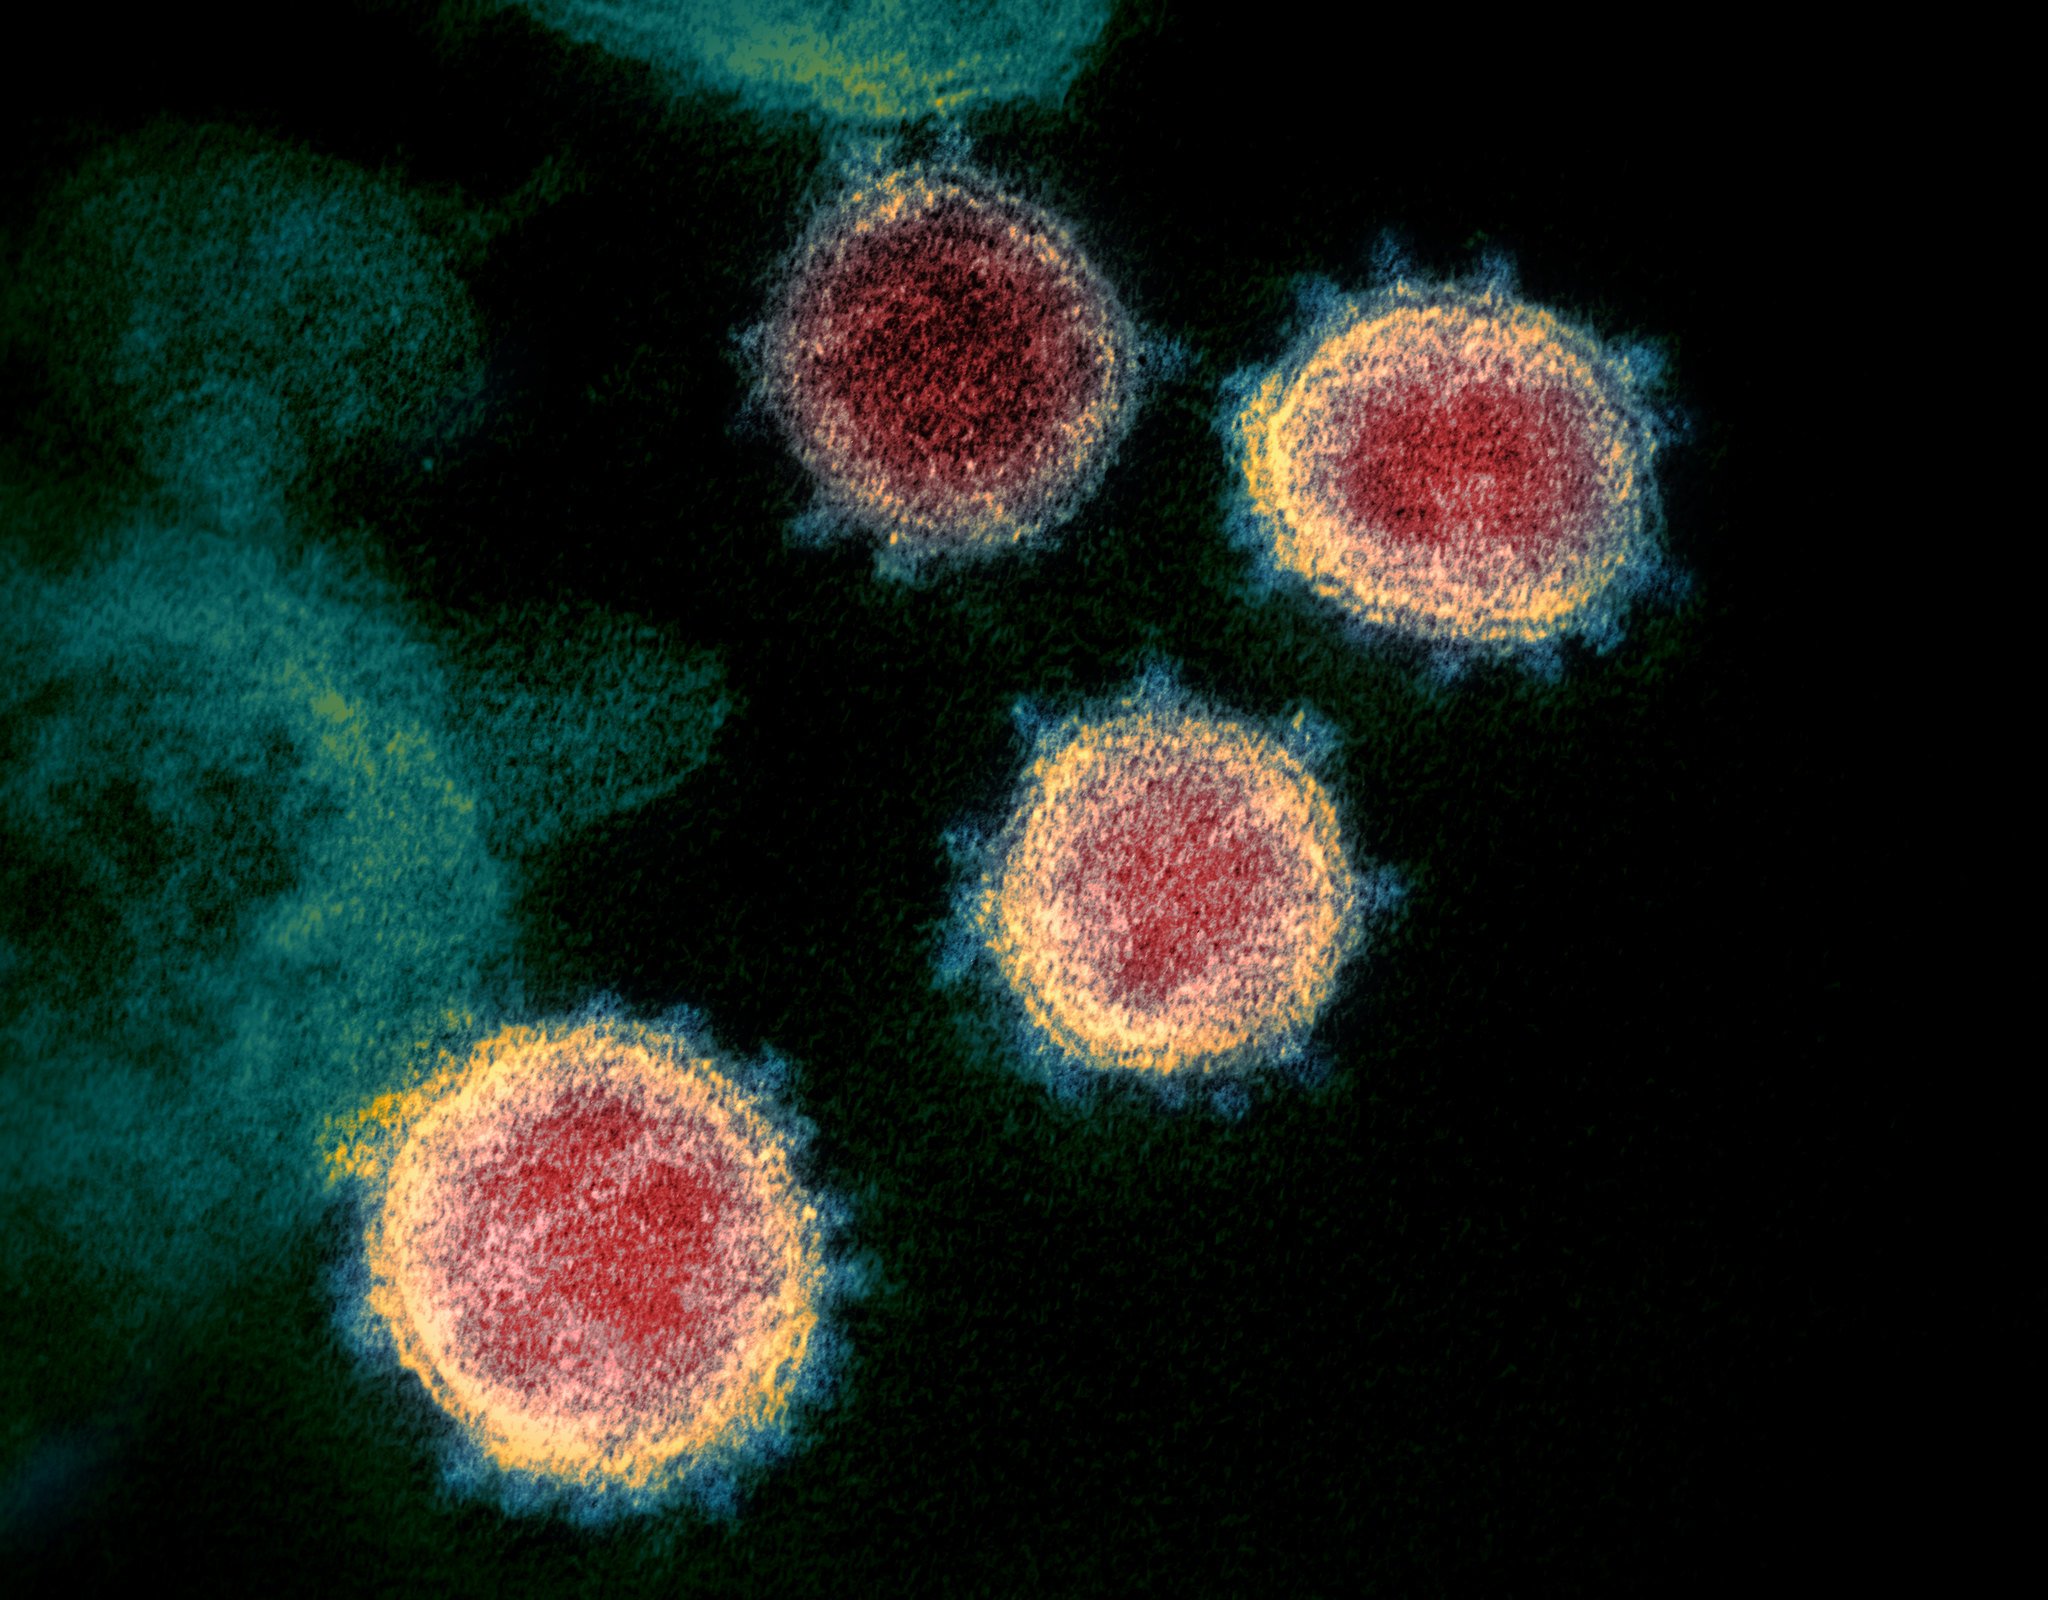 The SARS-CoV-2 coronavirus